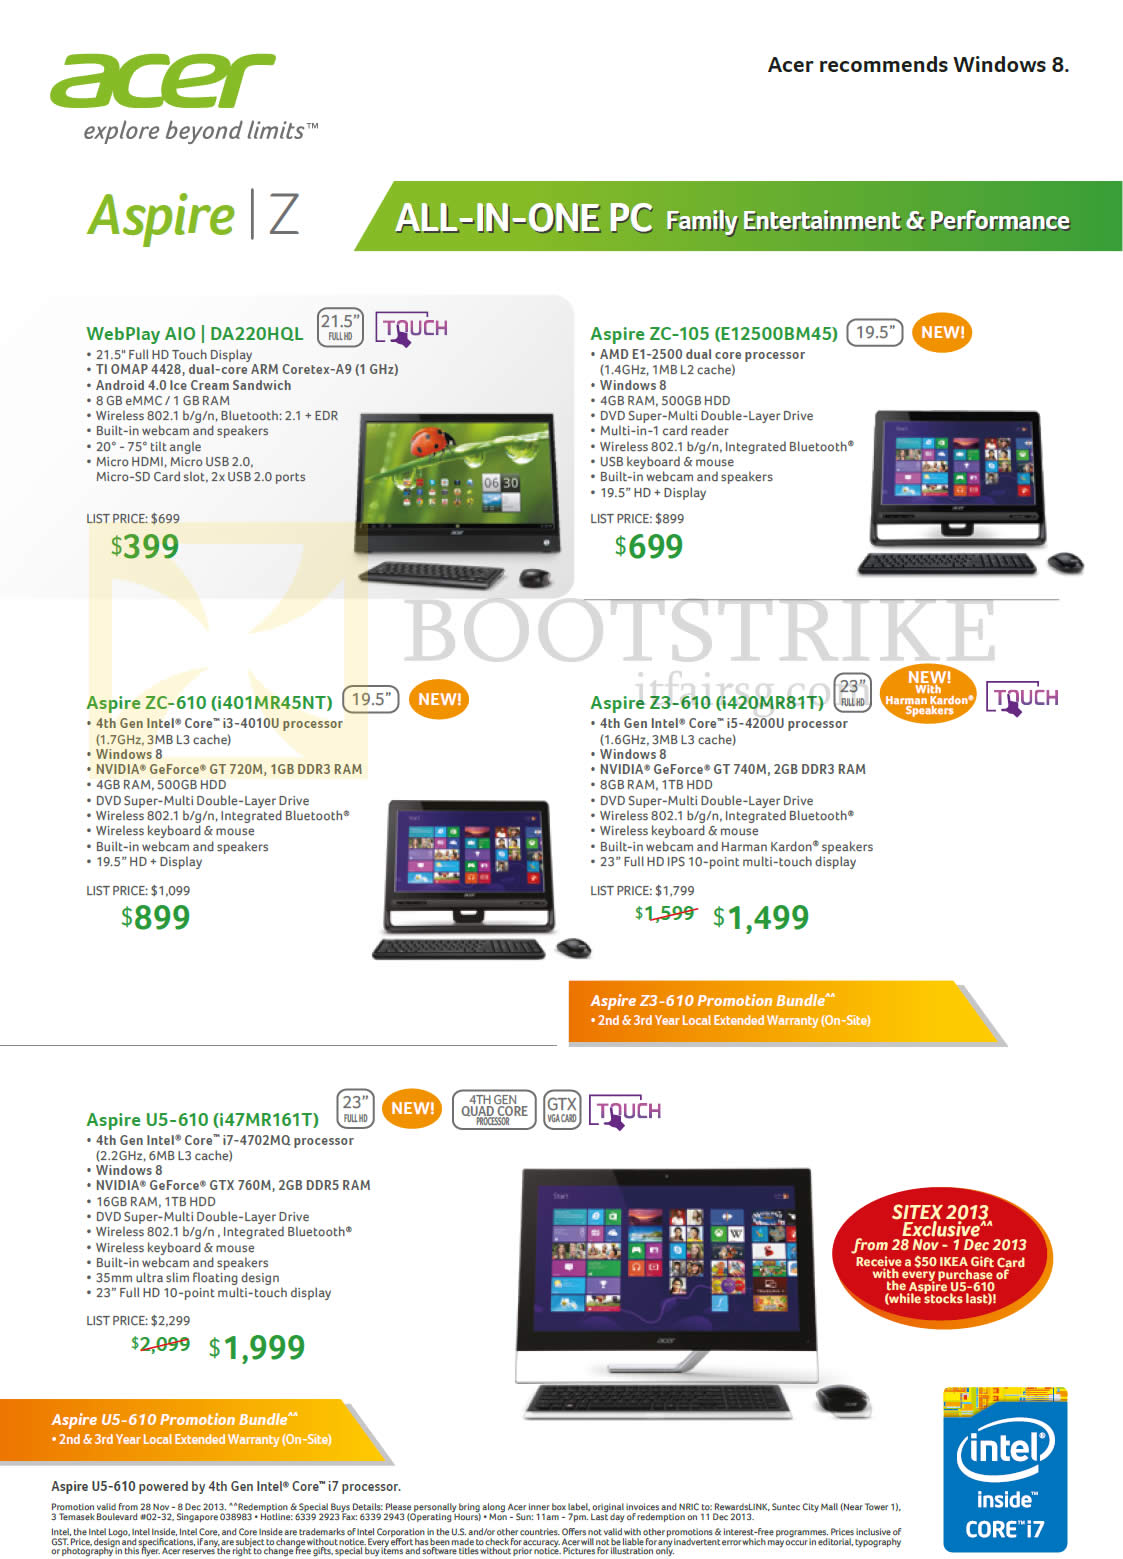 SITEX 2013 price list image brochure of Acer AIO Desktop PCs Webplay DA220HQL, Aspire ZC-105, ZC-610, Z3-610, U5-610